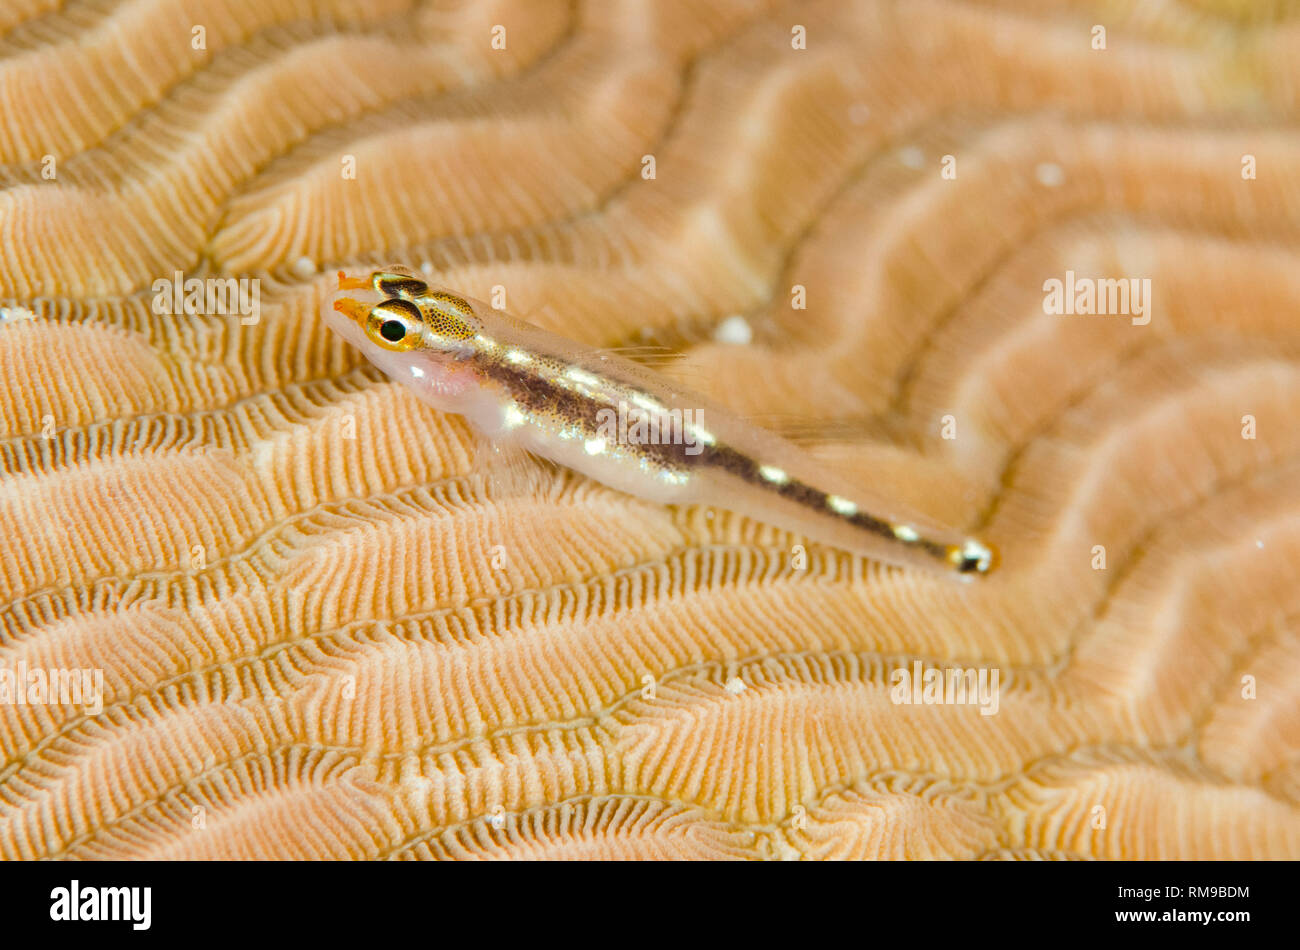 Sebree's Pygmygoby, Eviota sebreei, on coral, Tanjung Muara dive site, off Sermata Islands, near Alor, Indonesia, Indian Ocean Stock Photo